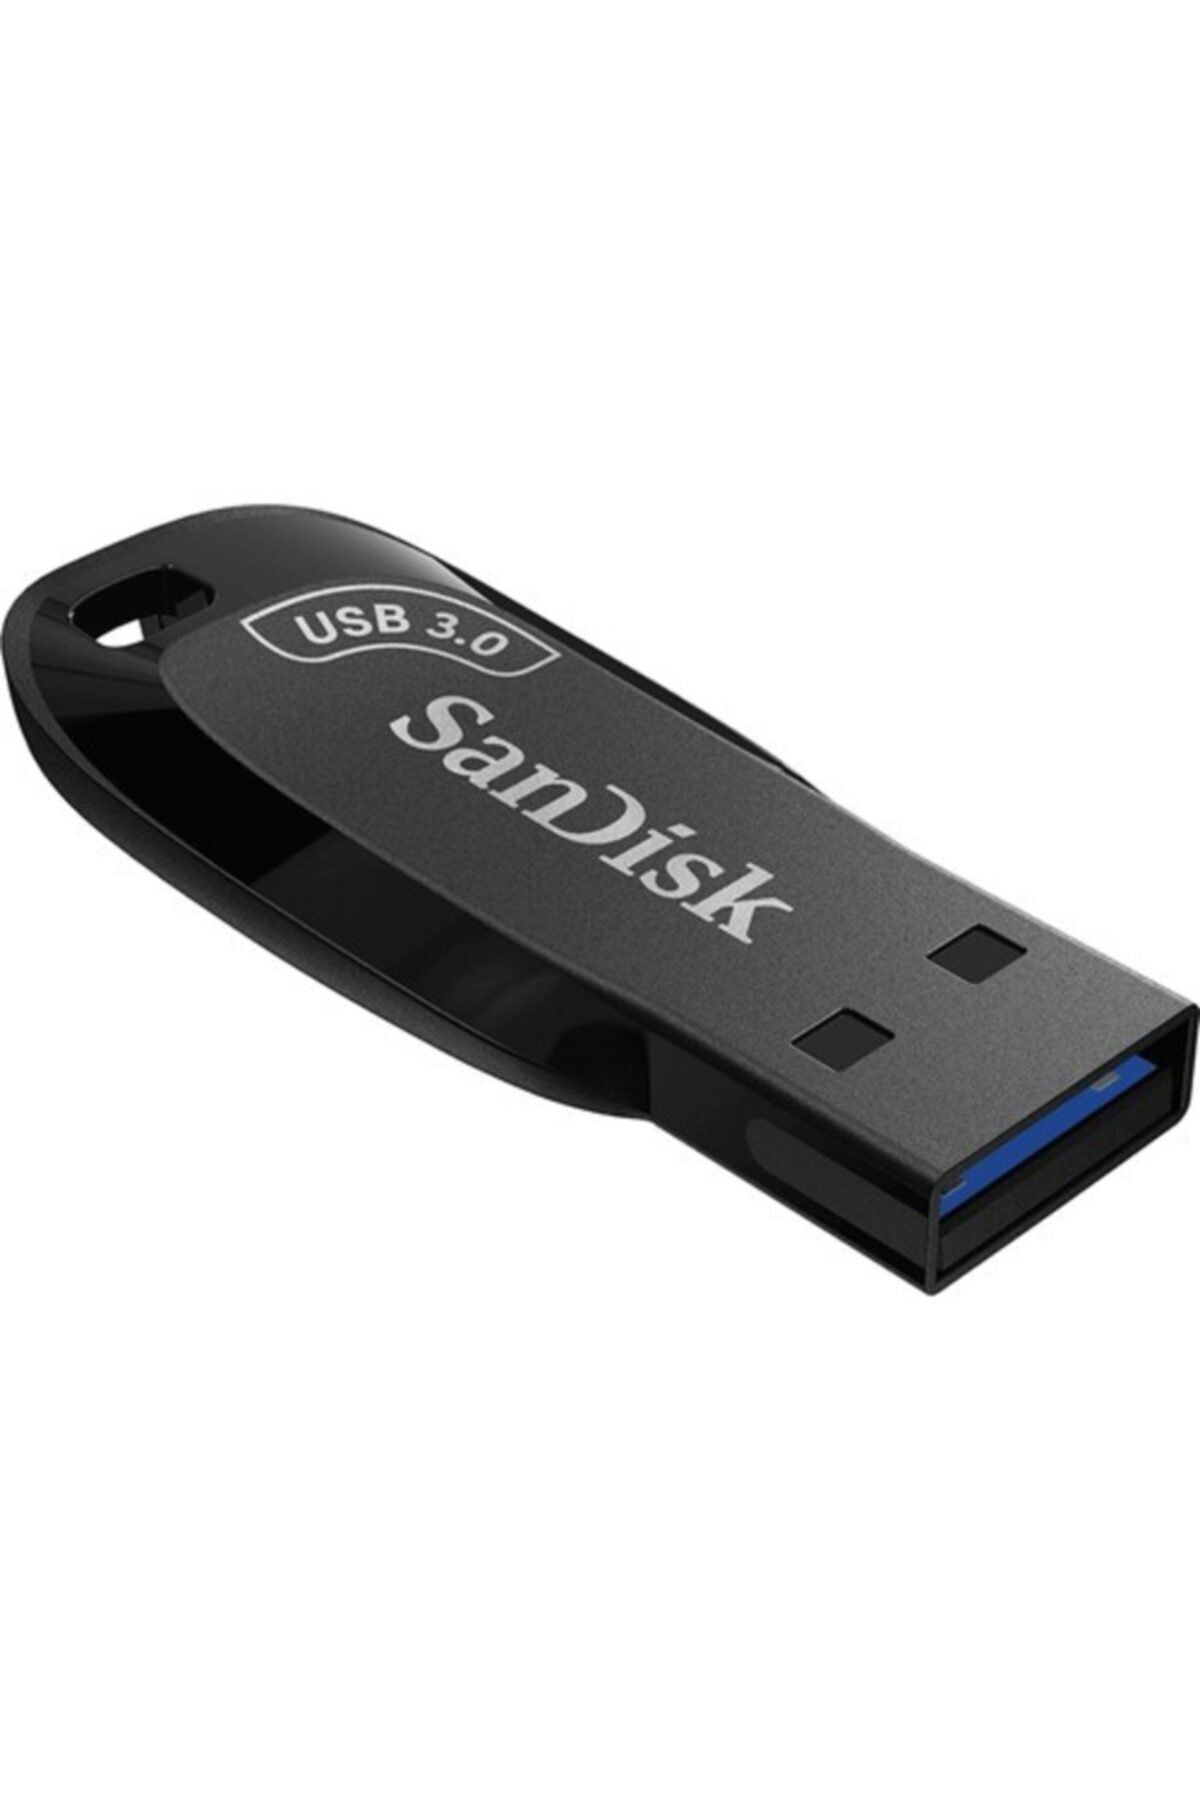 Sandisk Ultra Shift Sdcz410-256g-g46 256gb Usb 3.0 Flash Bellek